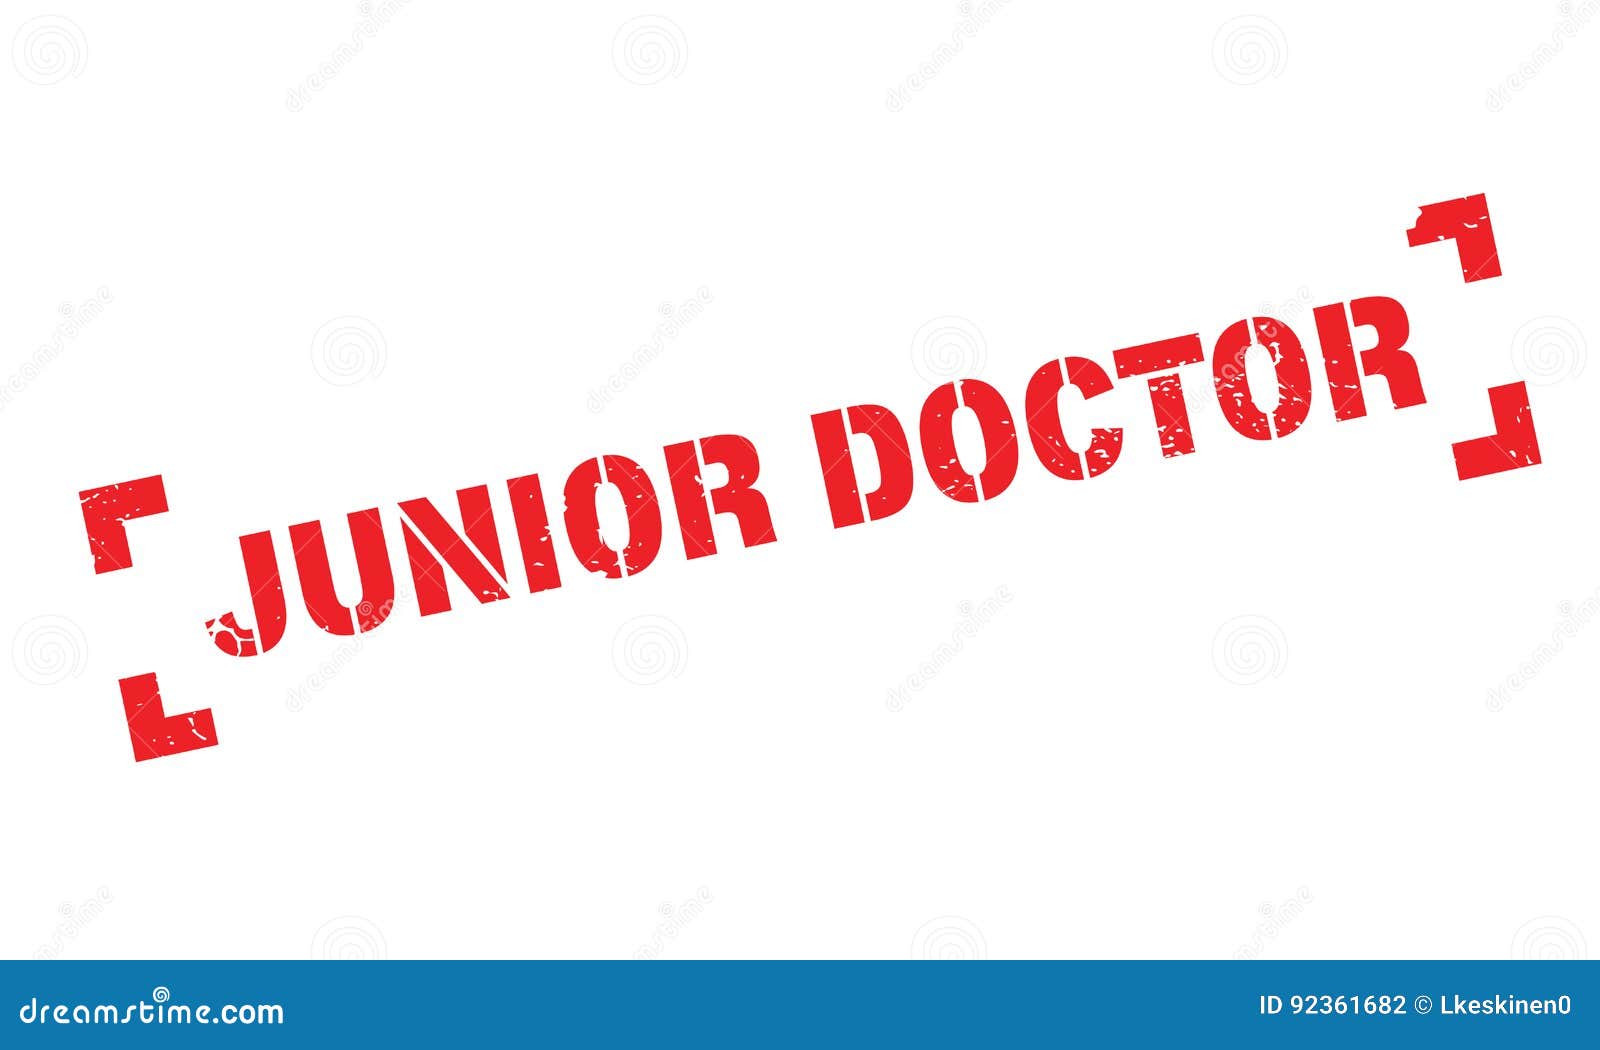 junior doctor rubber stamp